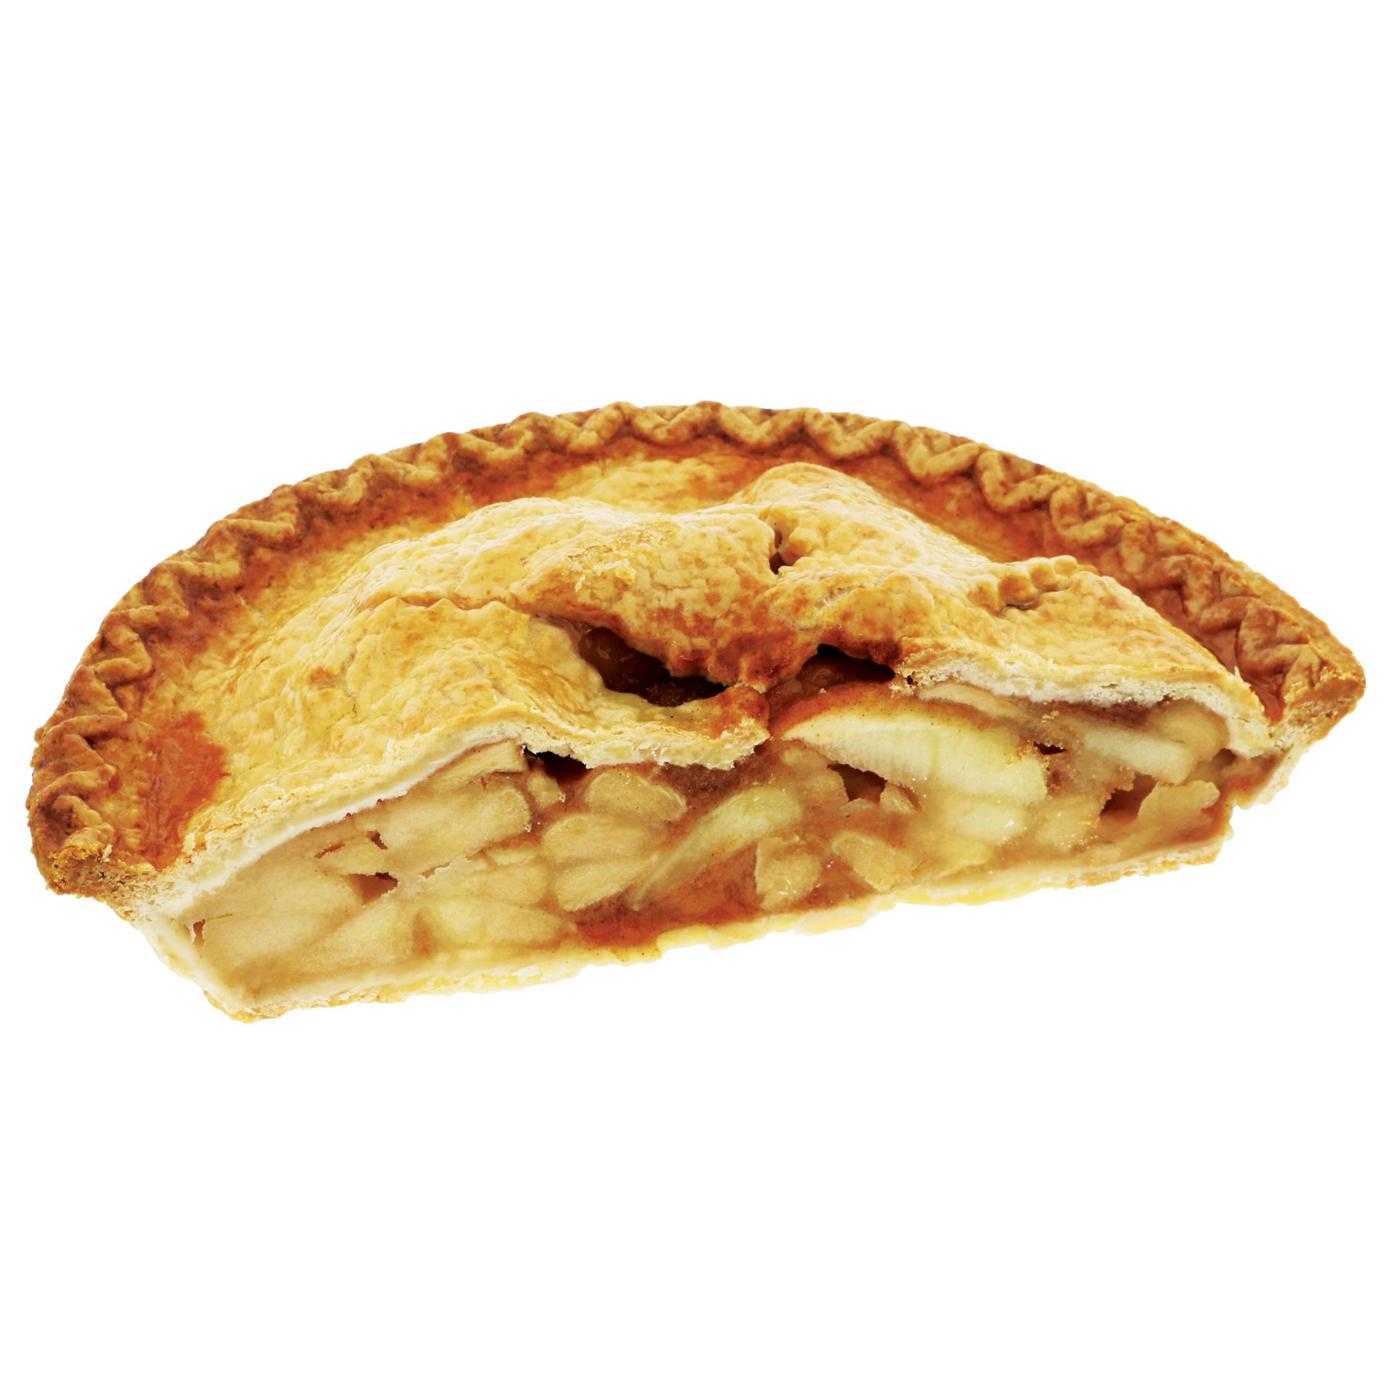 H-E-B Bakery Half Cinnamon Apple Pie; image 1 of 2